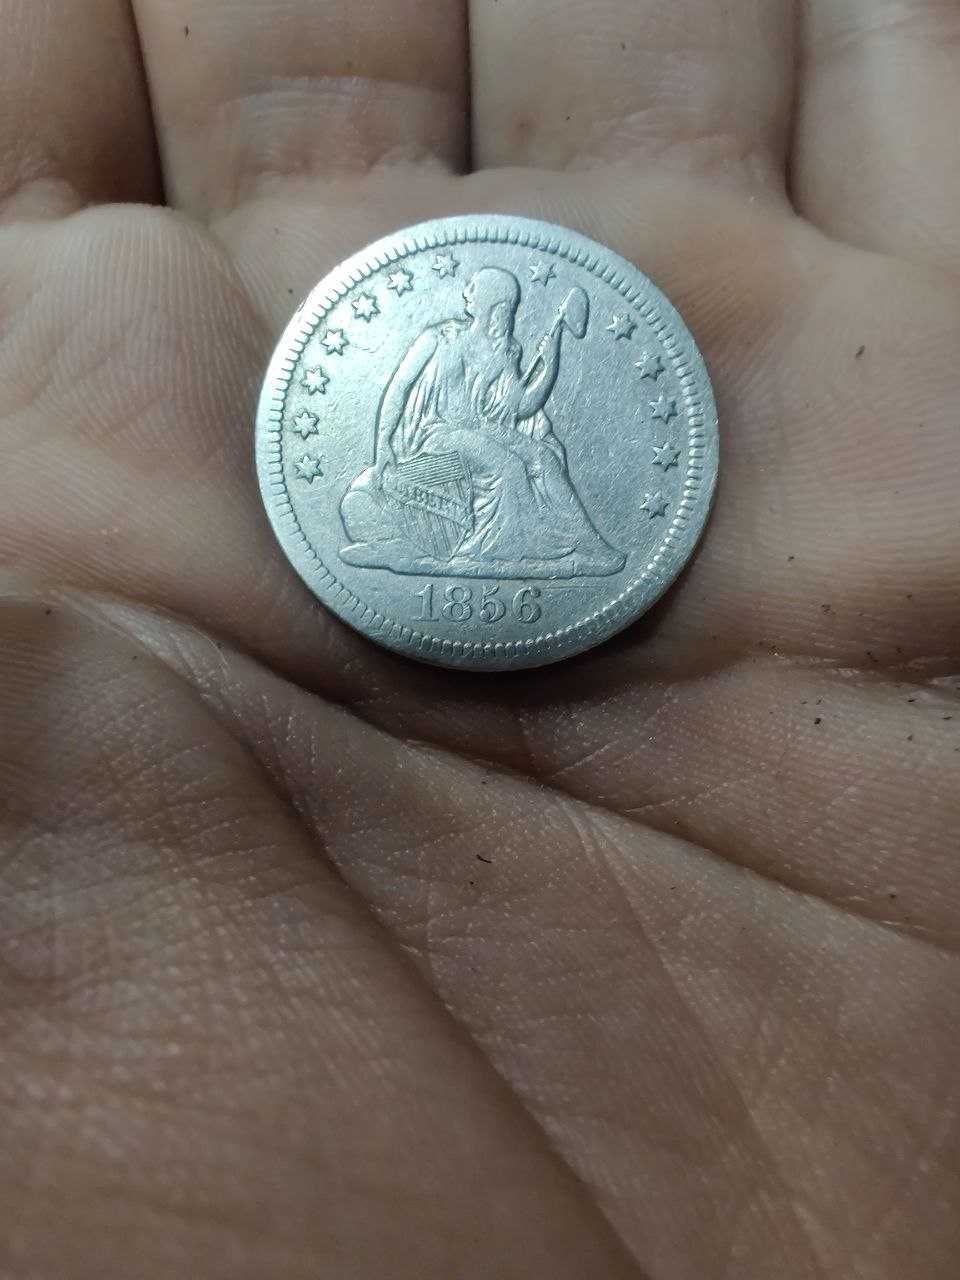 United States "Seated Liberty" Silver Quarter Dollar, 1856, original